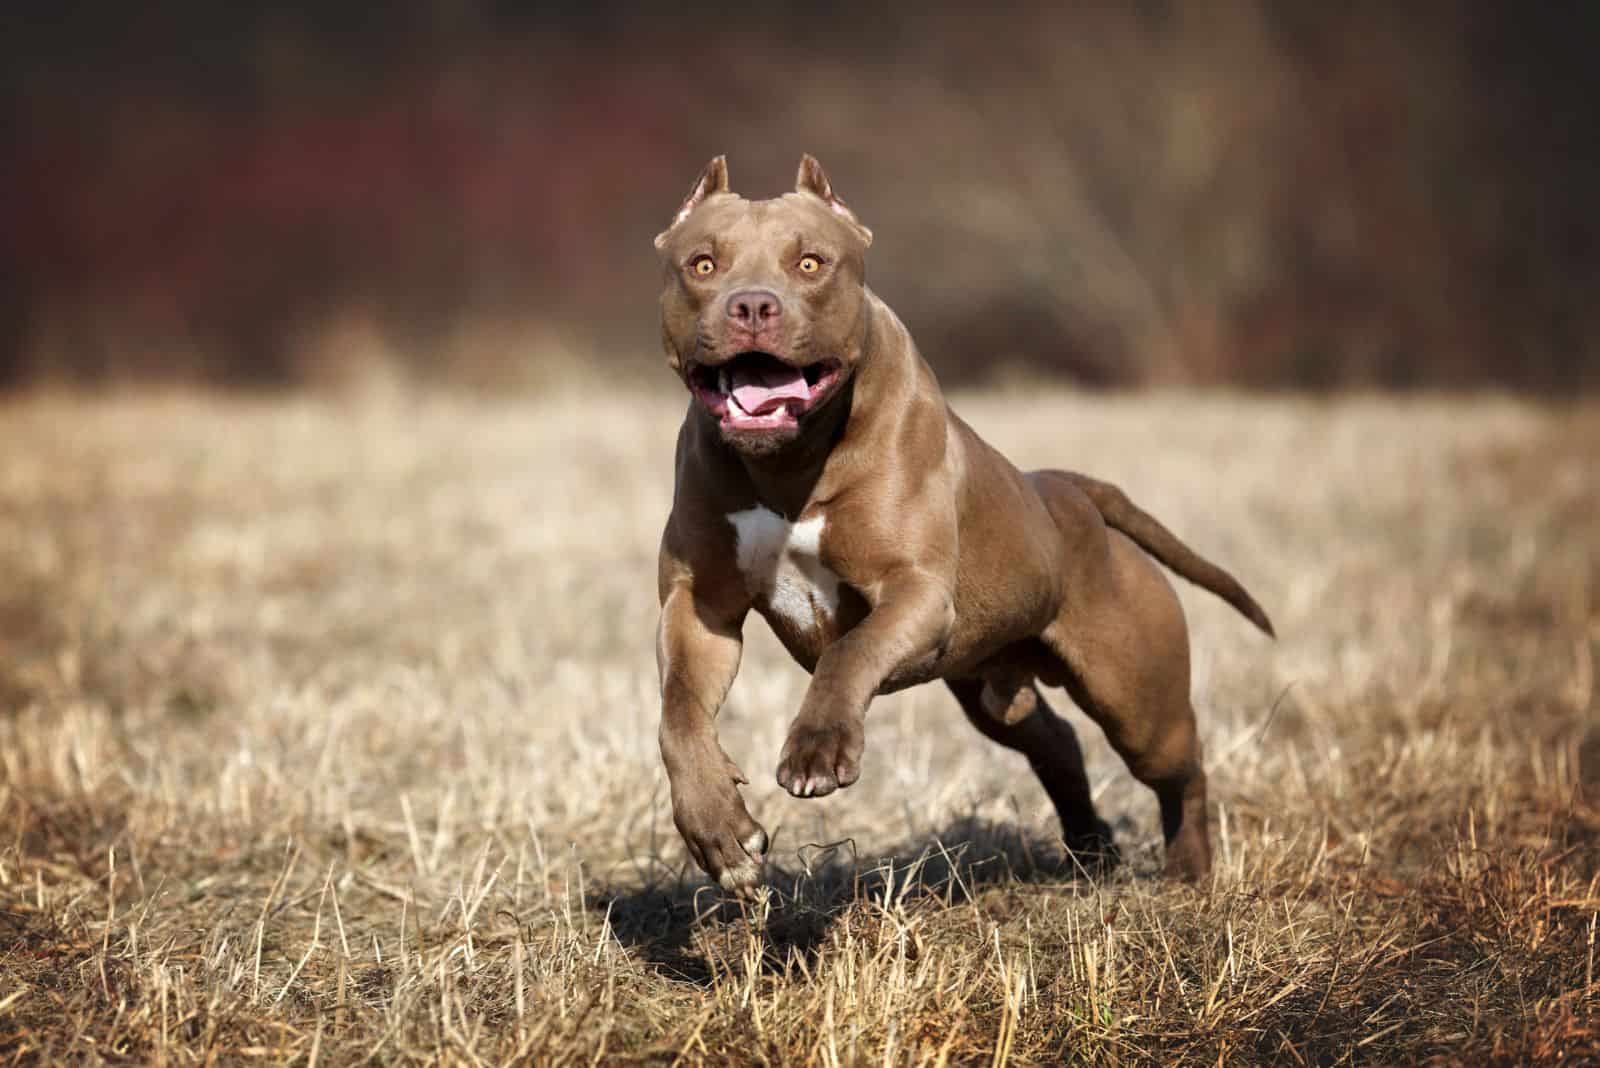 Pitbull runs across the field